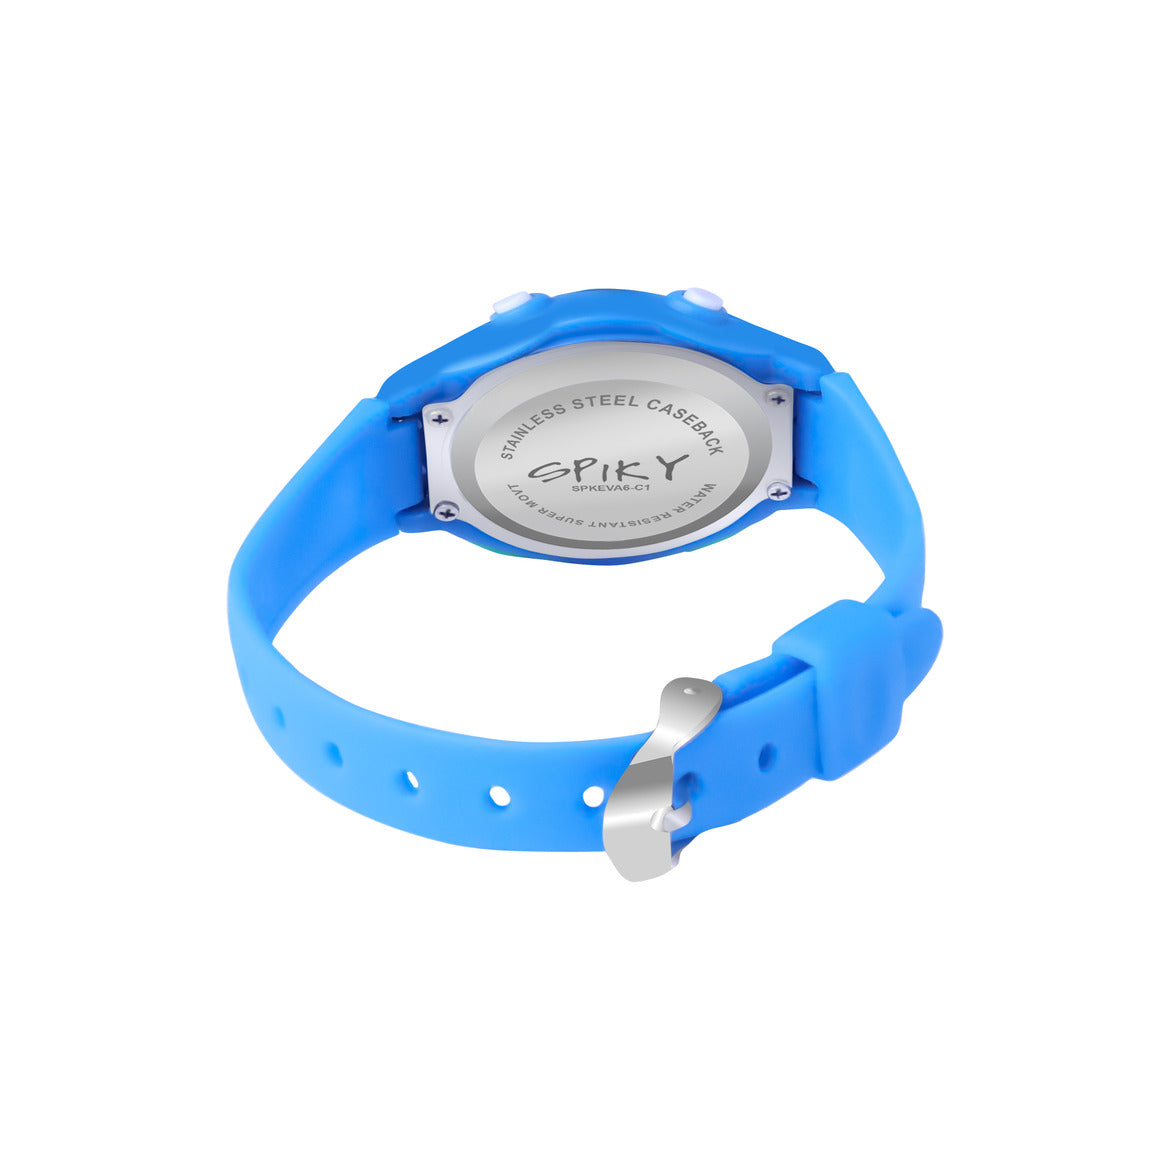 Spiky Round Digital Sports Watch - Blue